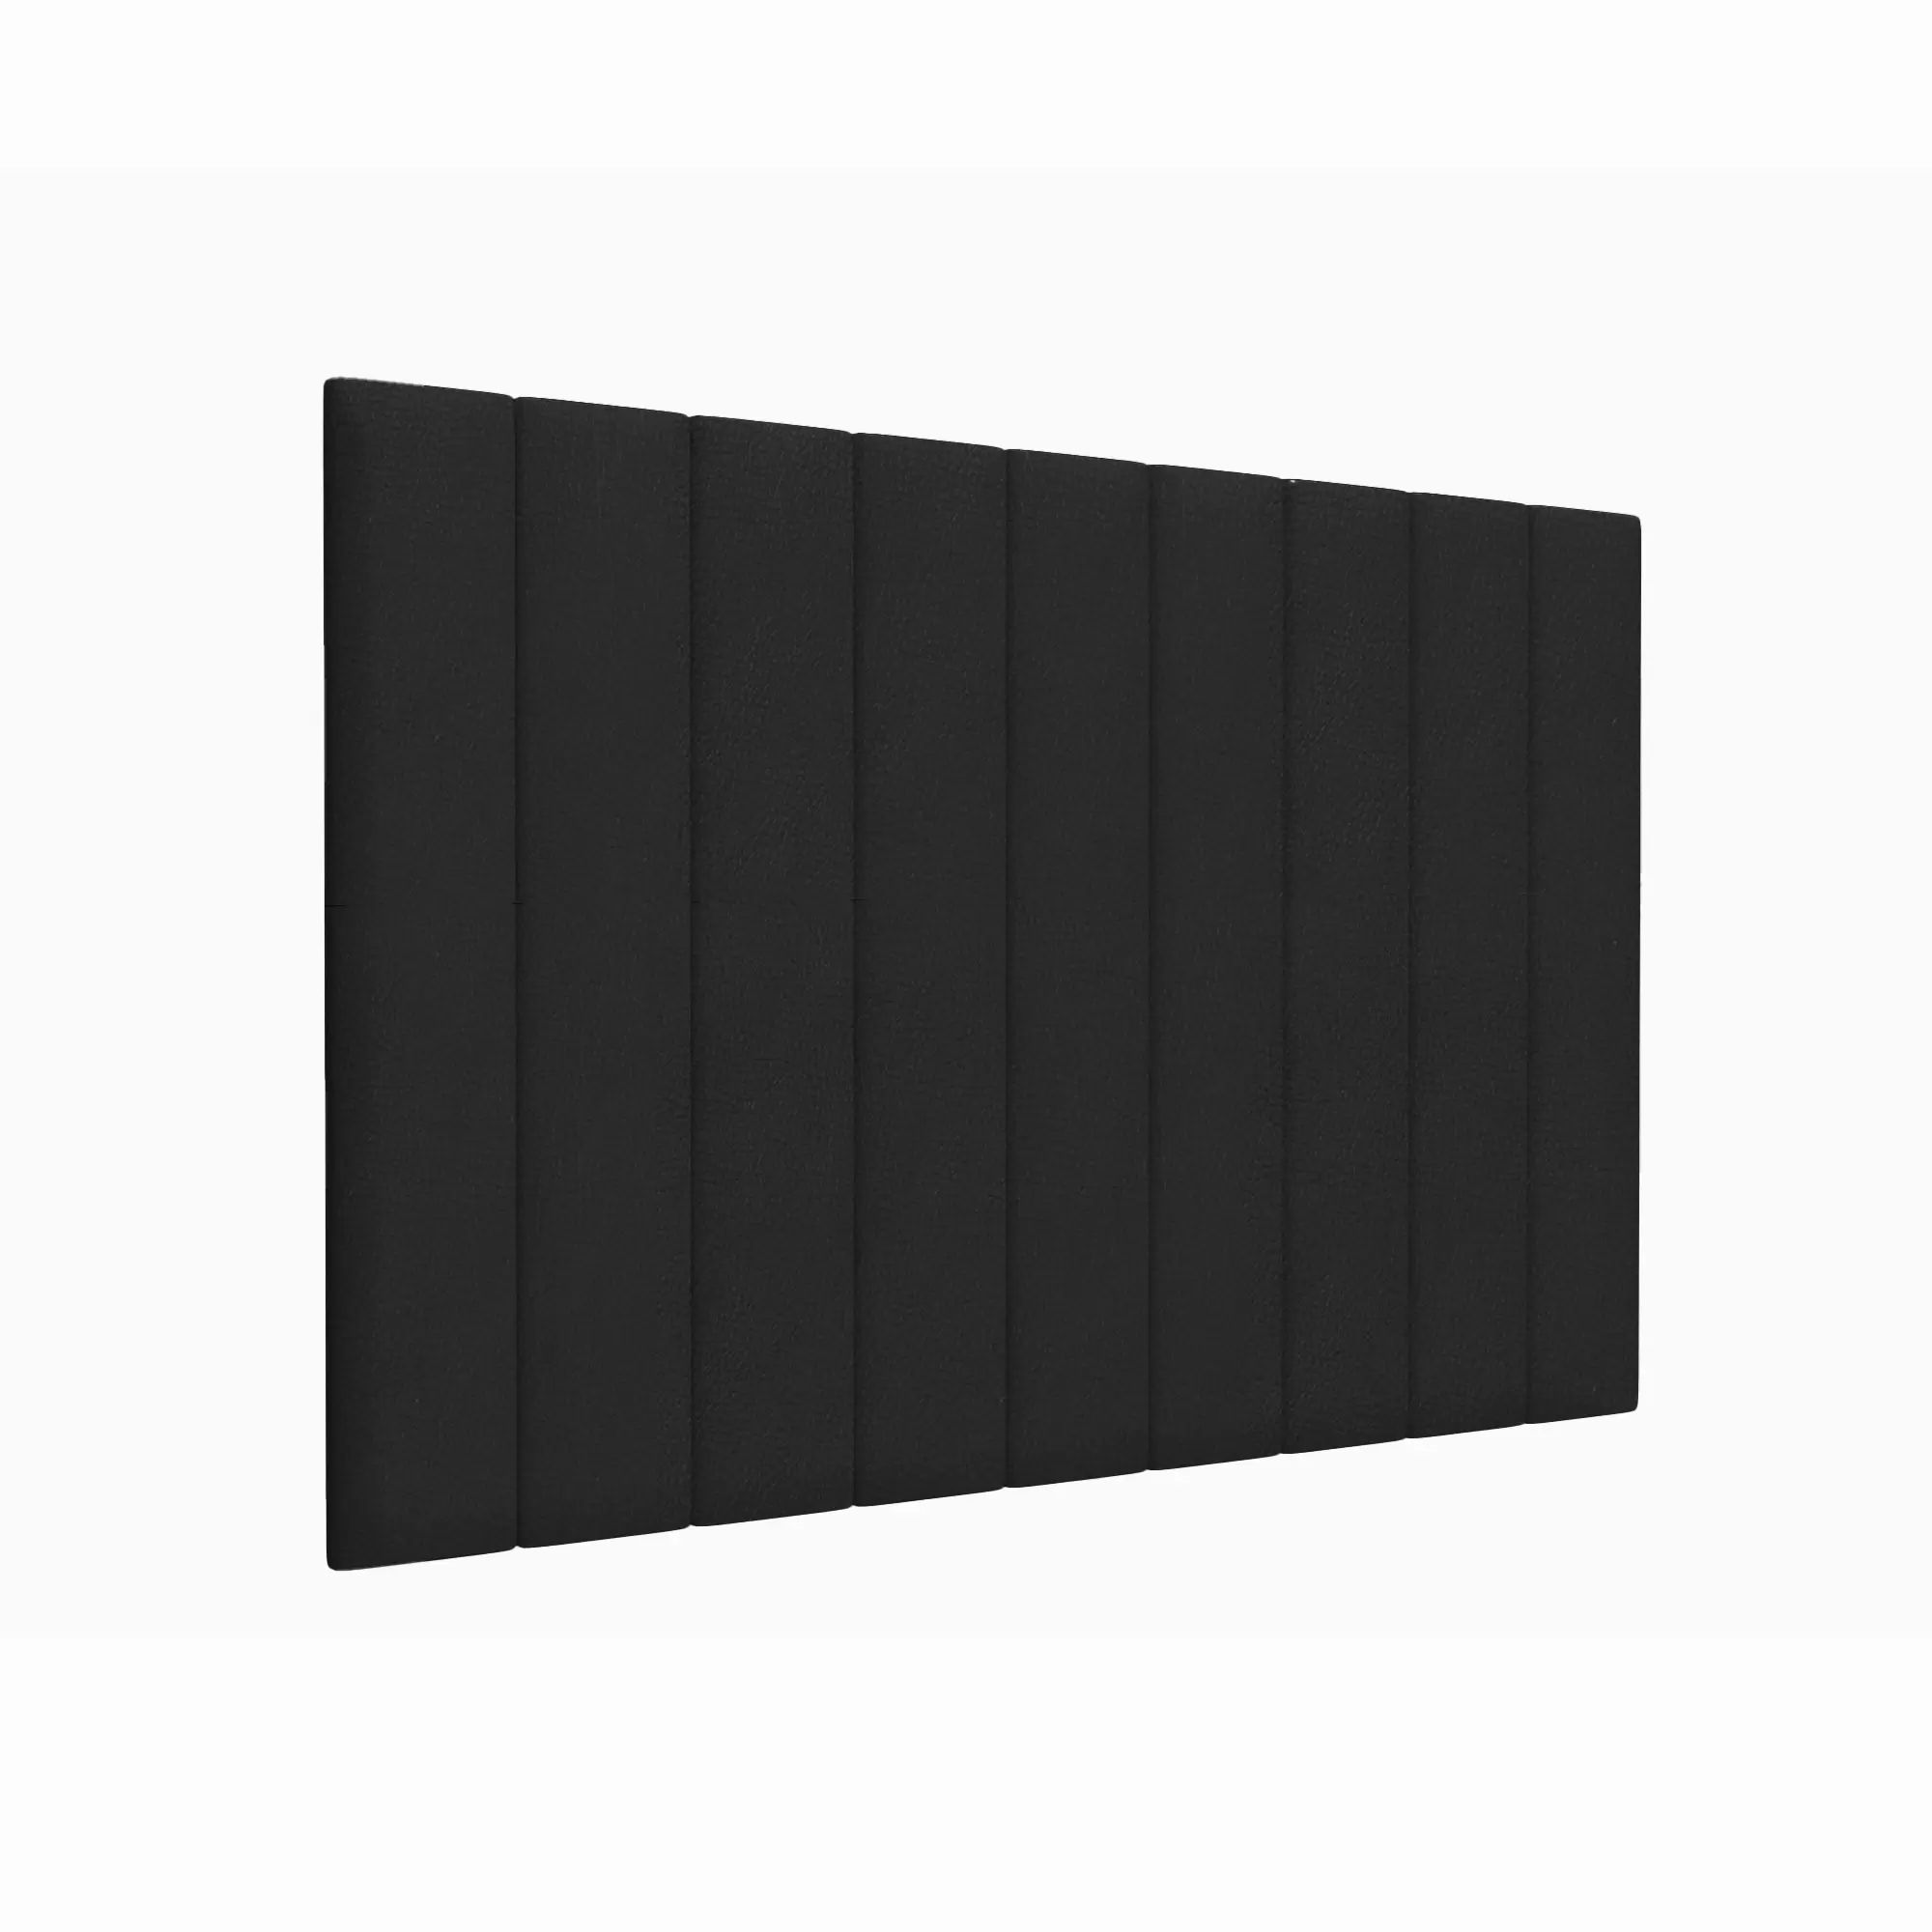 Стеновая панель Eco Leather Black 15х90 см 2 шт.